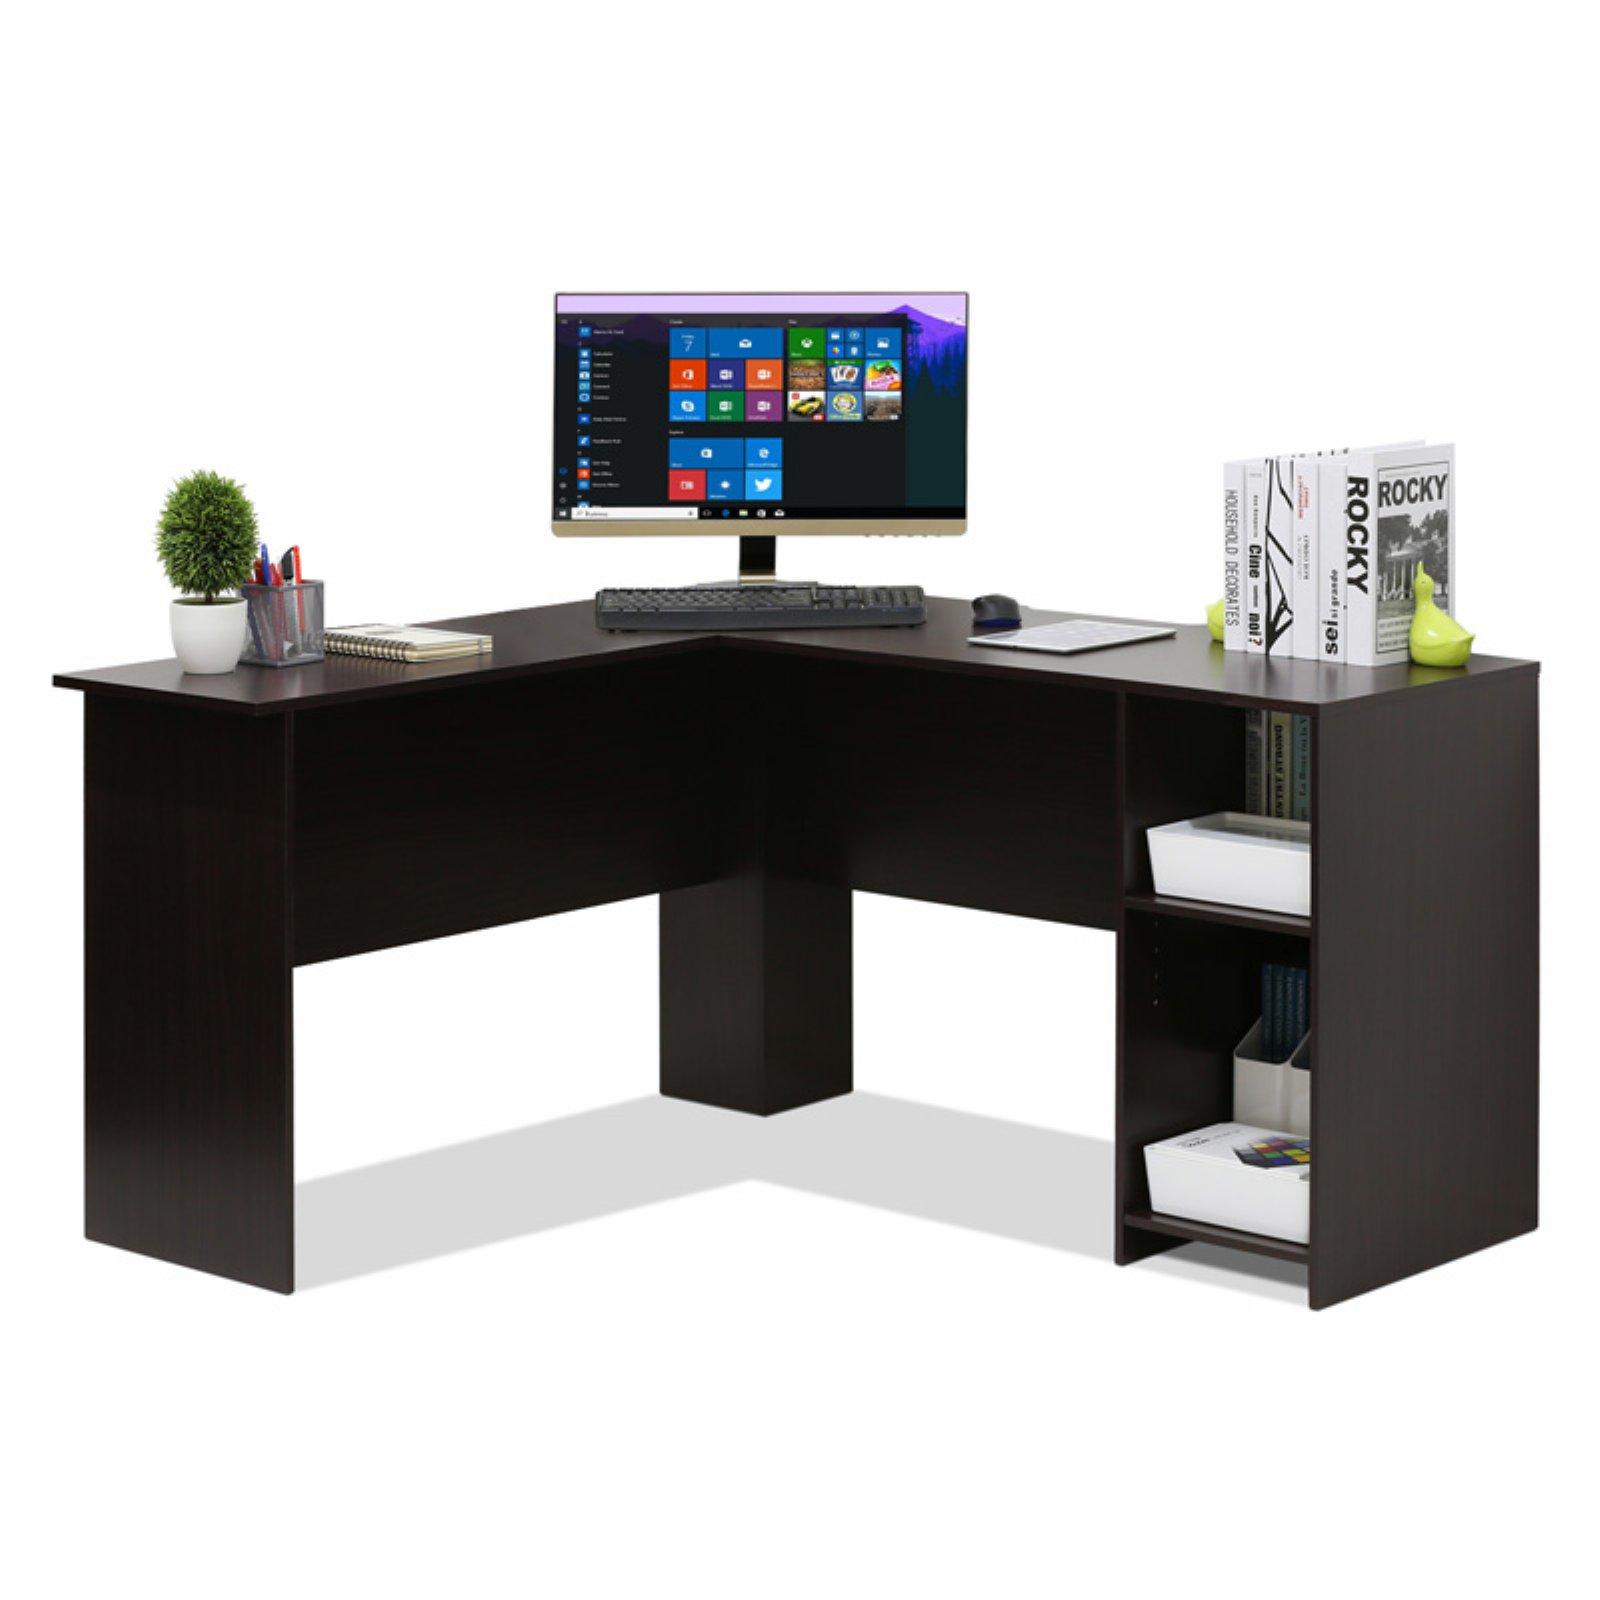 Furinno Indo L-Shaped Desk with Bookshelves, Espresso - image 5 of 8